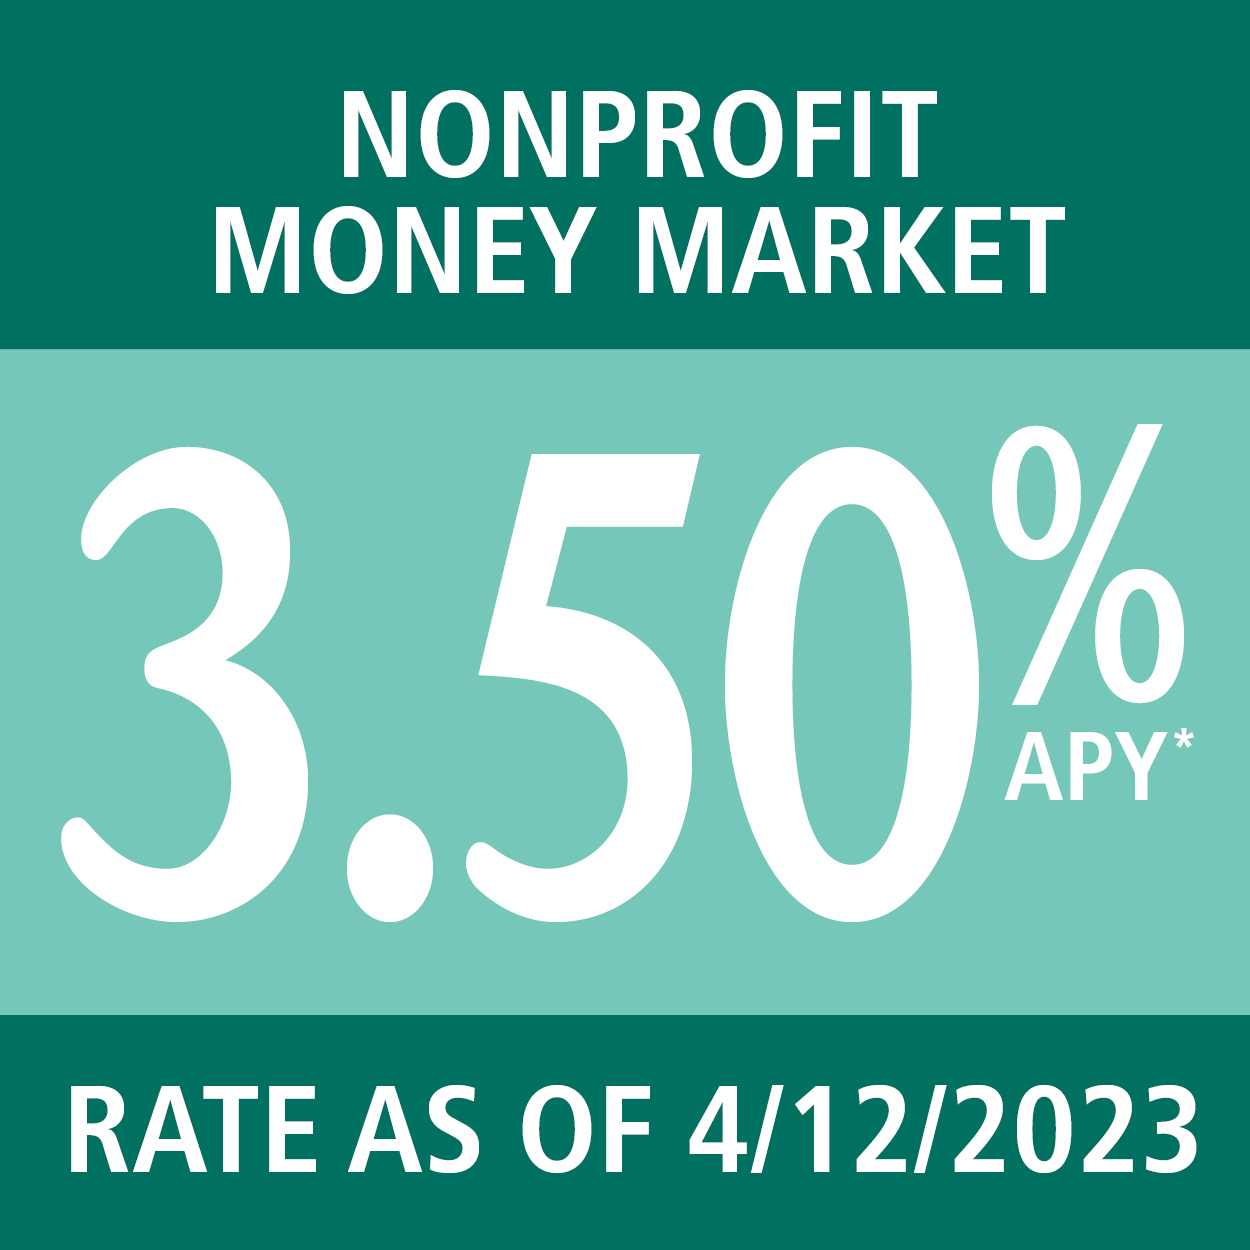 Nonprofit Money Market, 3.50% APY